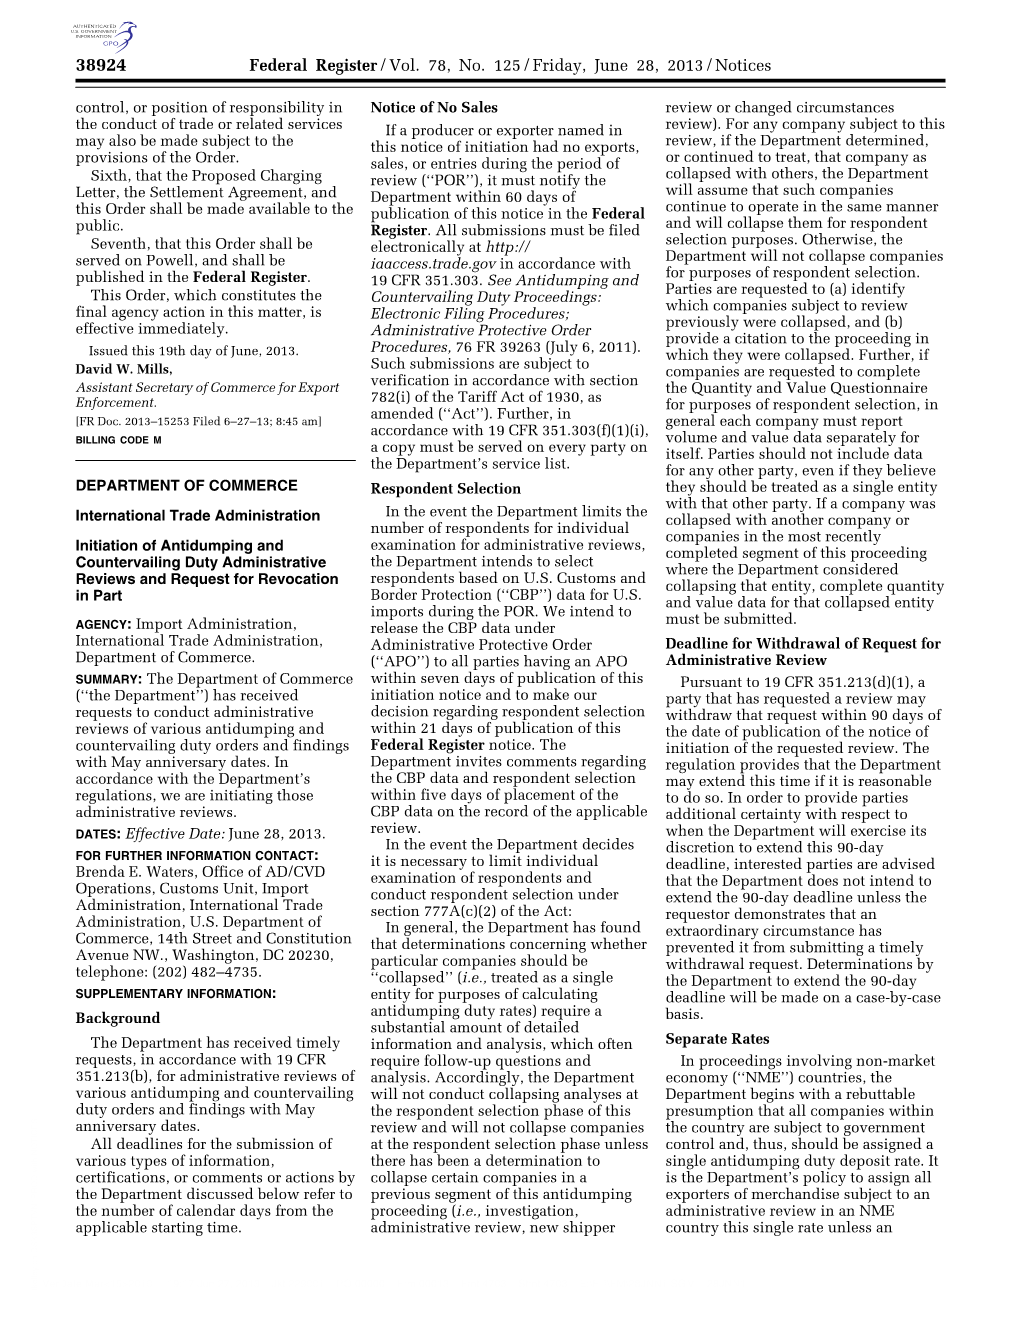 Federal Register/Vol. 78, No. 125/Friday, June 28, 2013/Notices